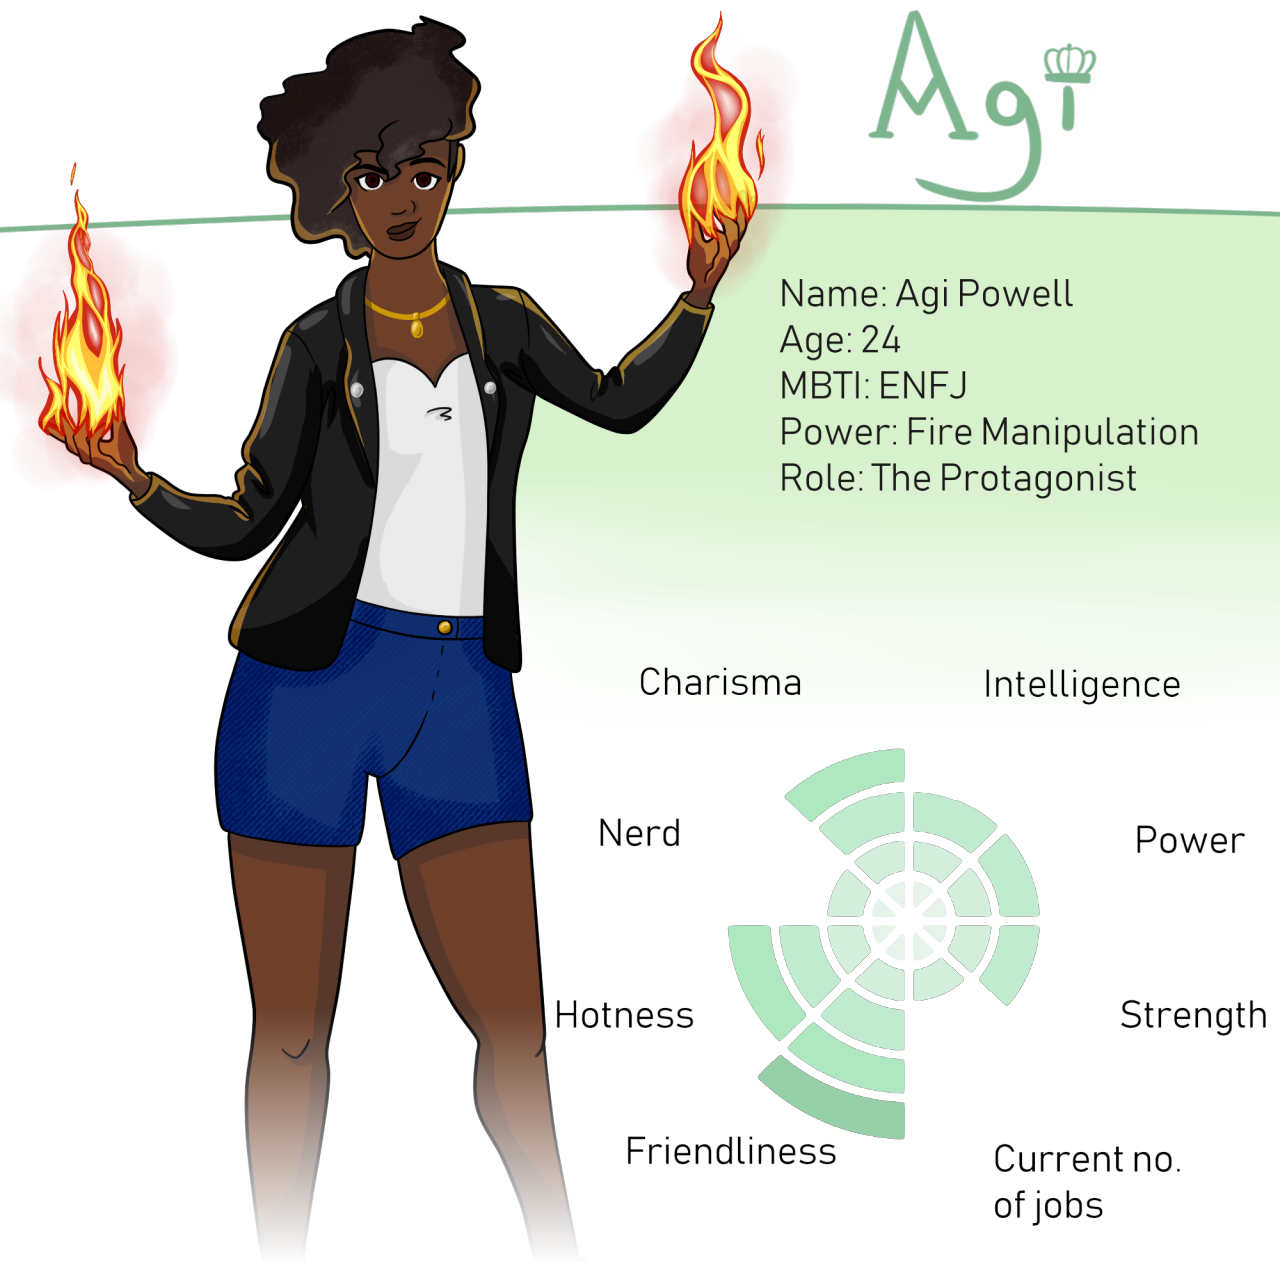 Name: Agi Powell. Age: 24. MBTI: ENFJ. Power: Fire Manipulation. Role: The Protagonist.